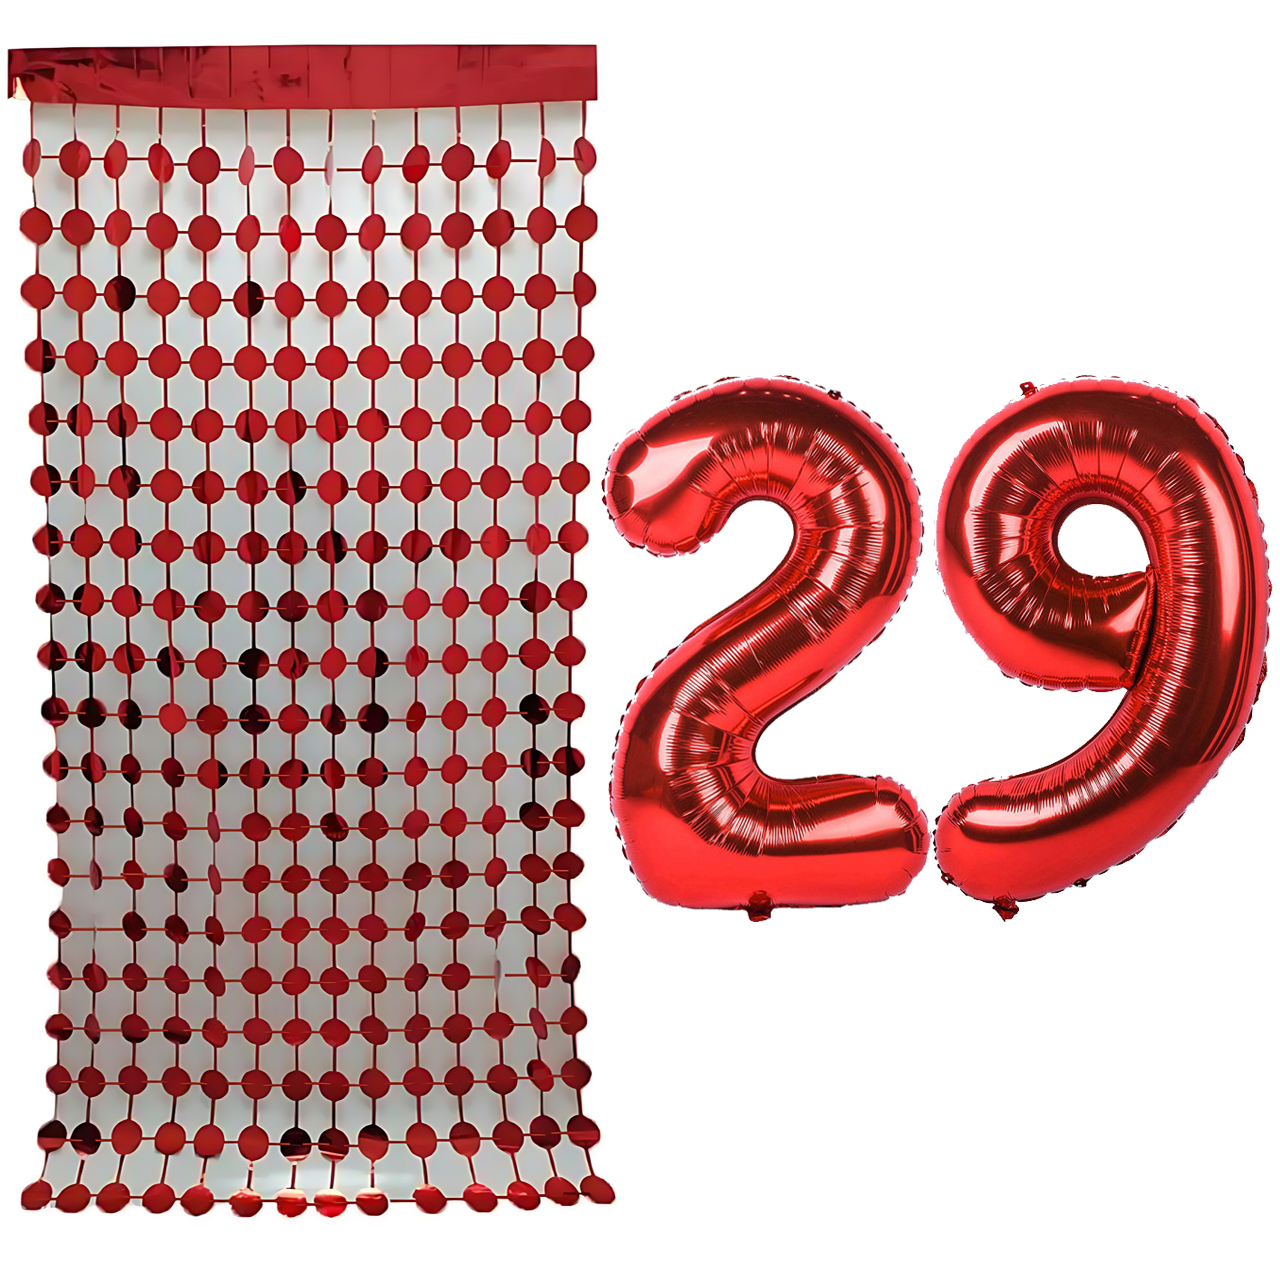 بادکنک فویلی مستر تم طرح عدد 29 به همراه ریسه تزئینی بسته 3 عددی